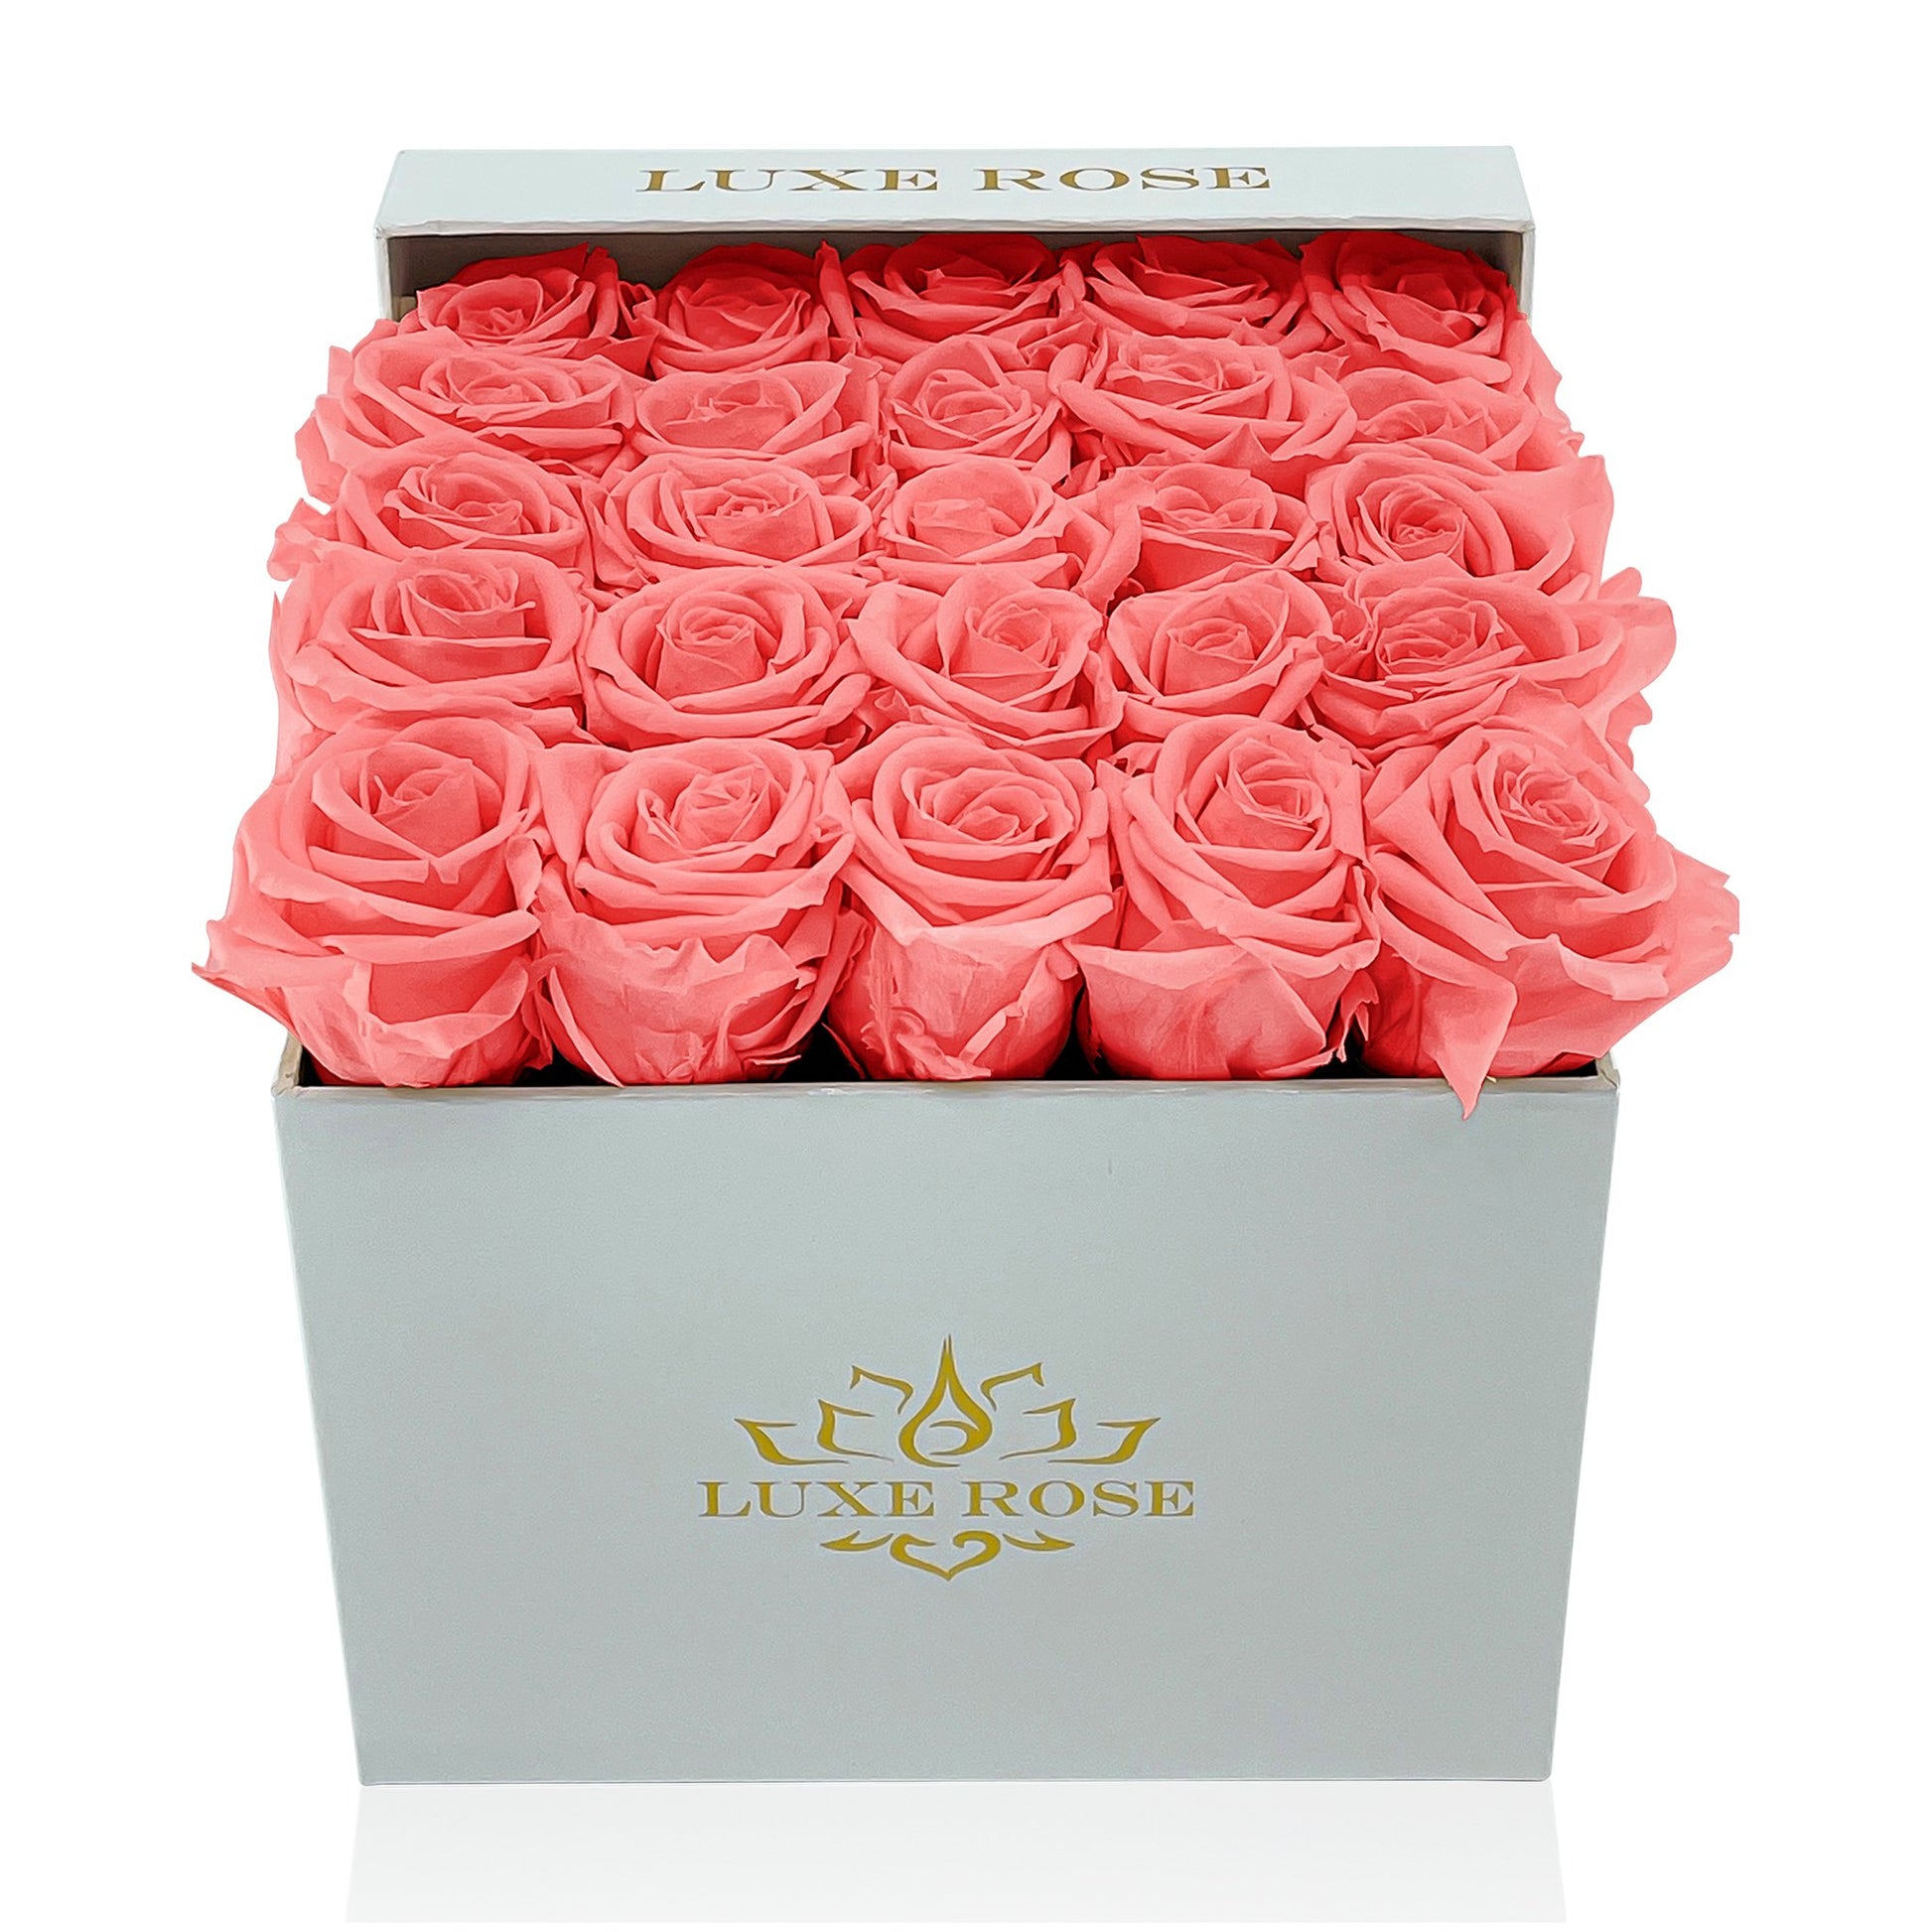 Preserved Roses Small Box | Cherry Blossom - White - Roses